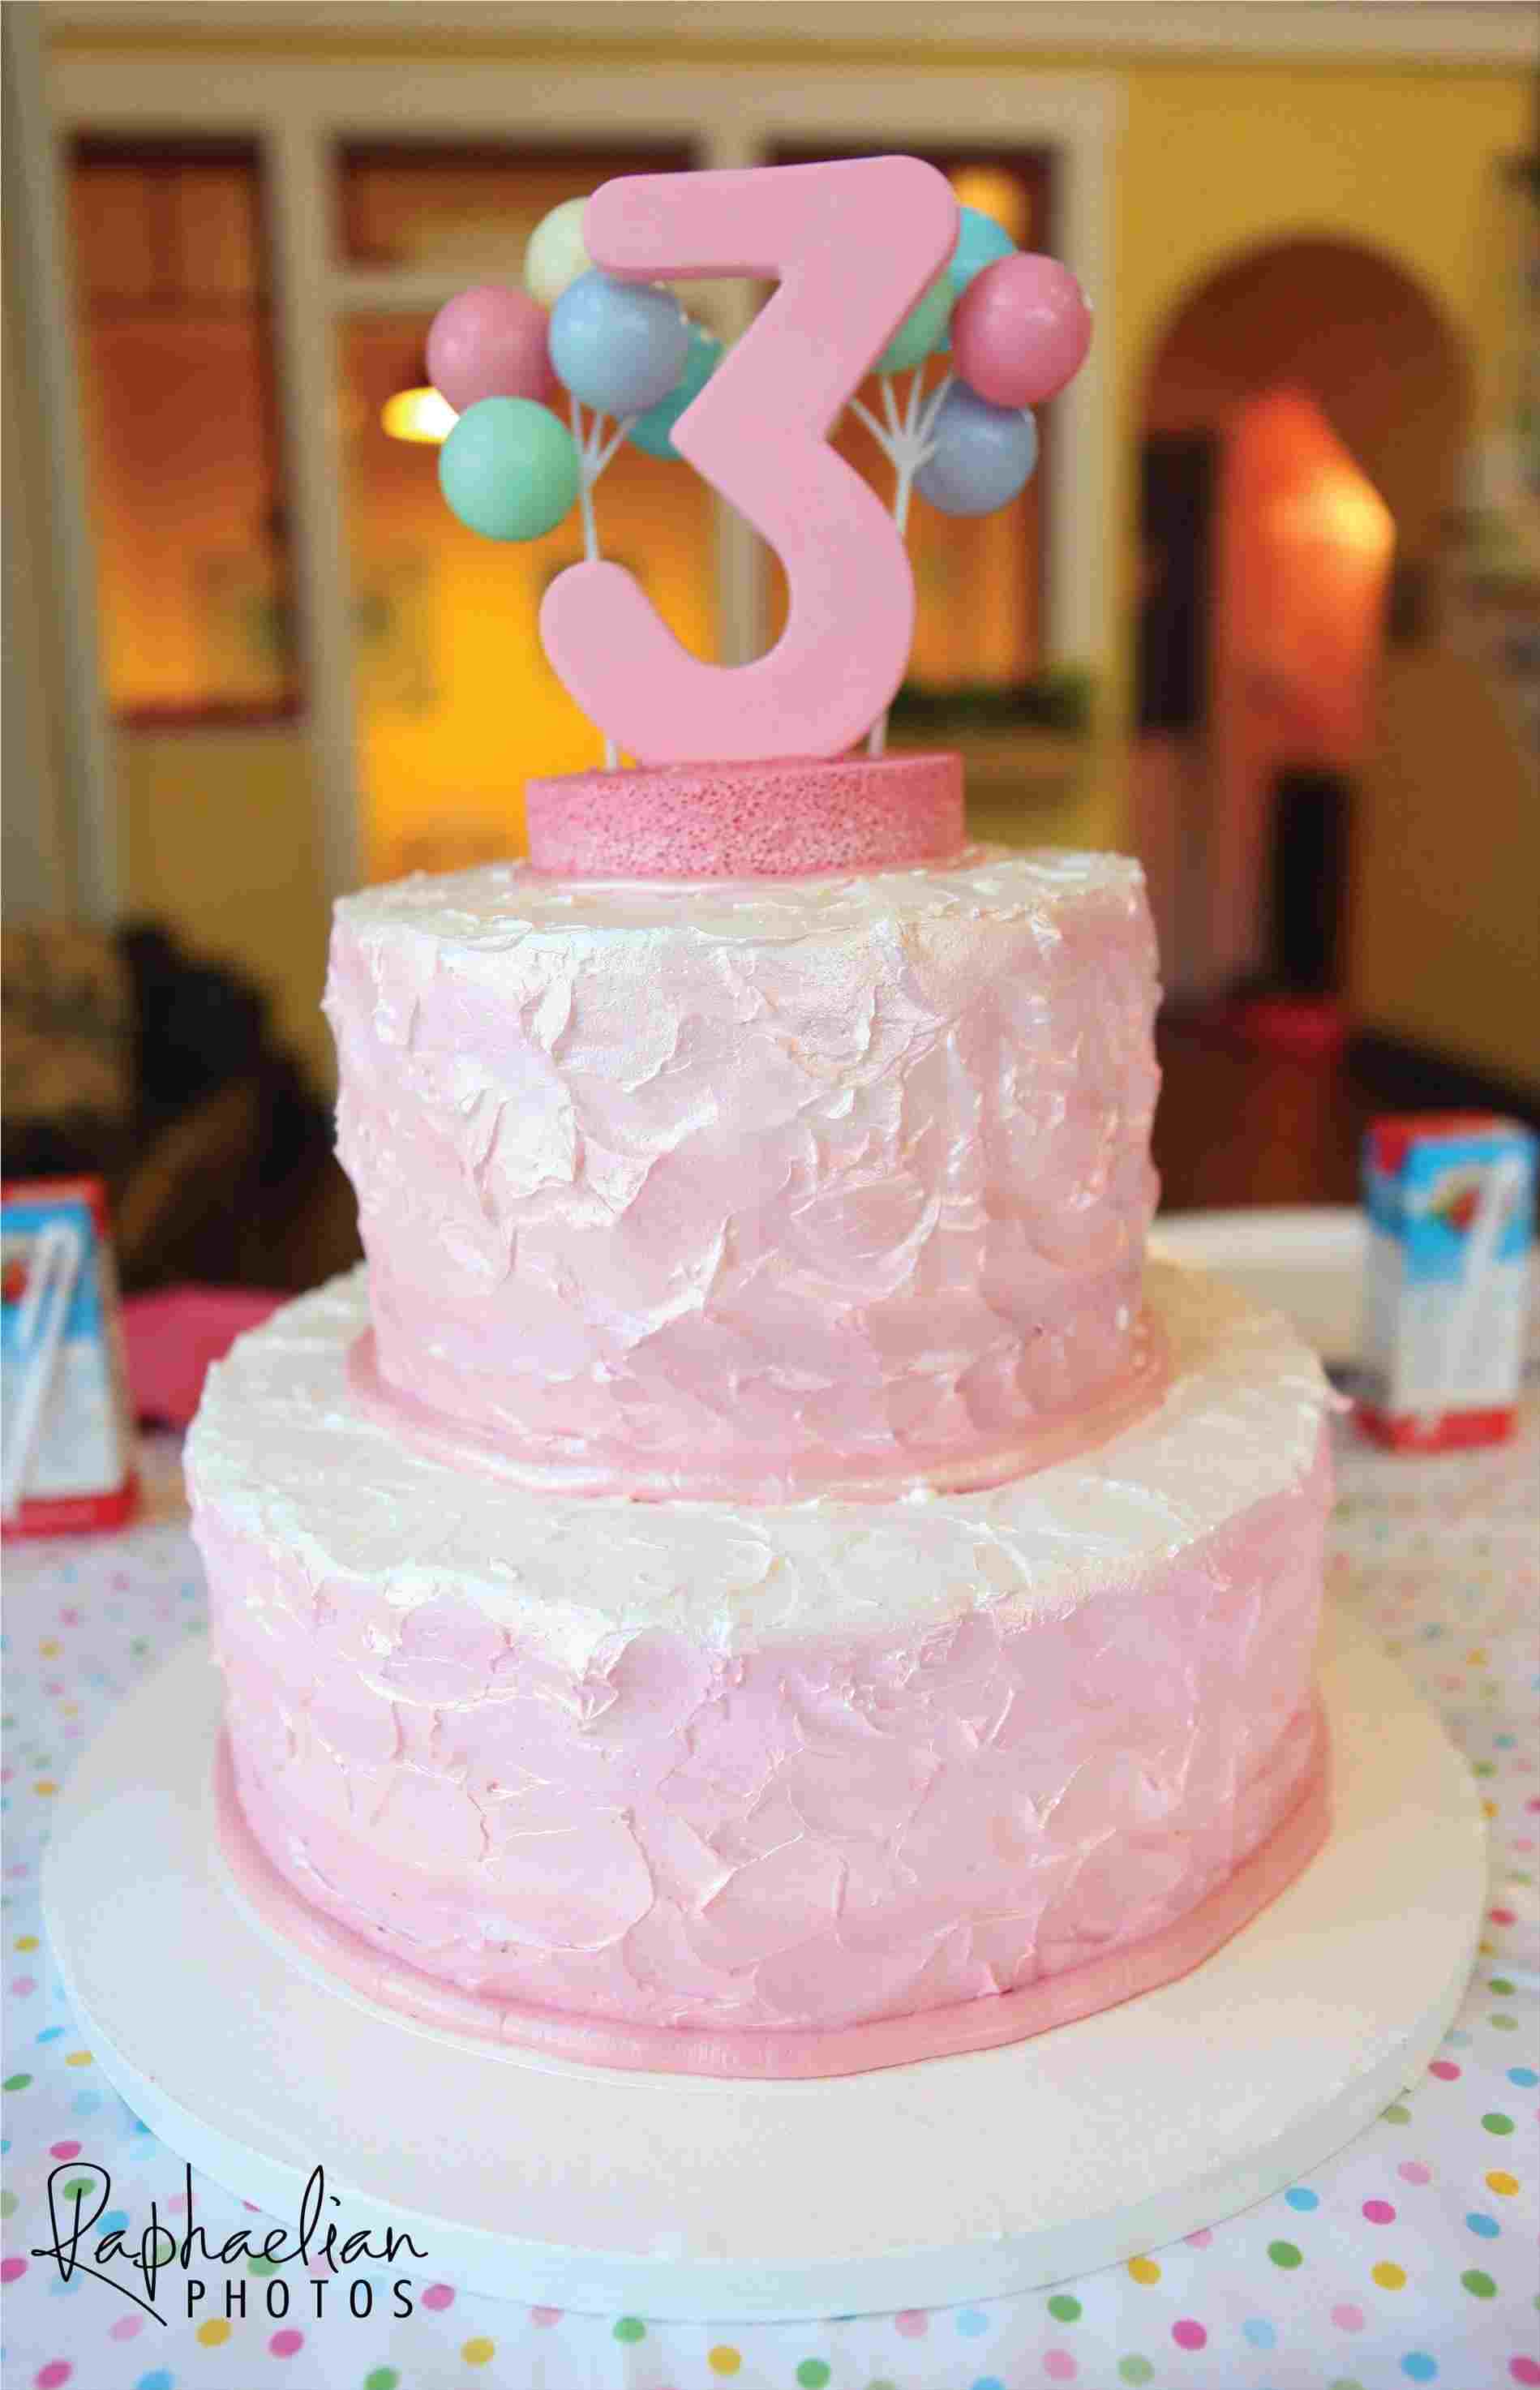 Ankita Name Wallpaper - Happy Birthday Cake 3 Years - HD Wallpaper 